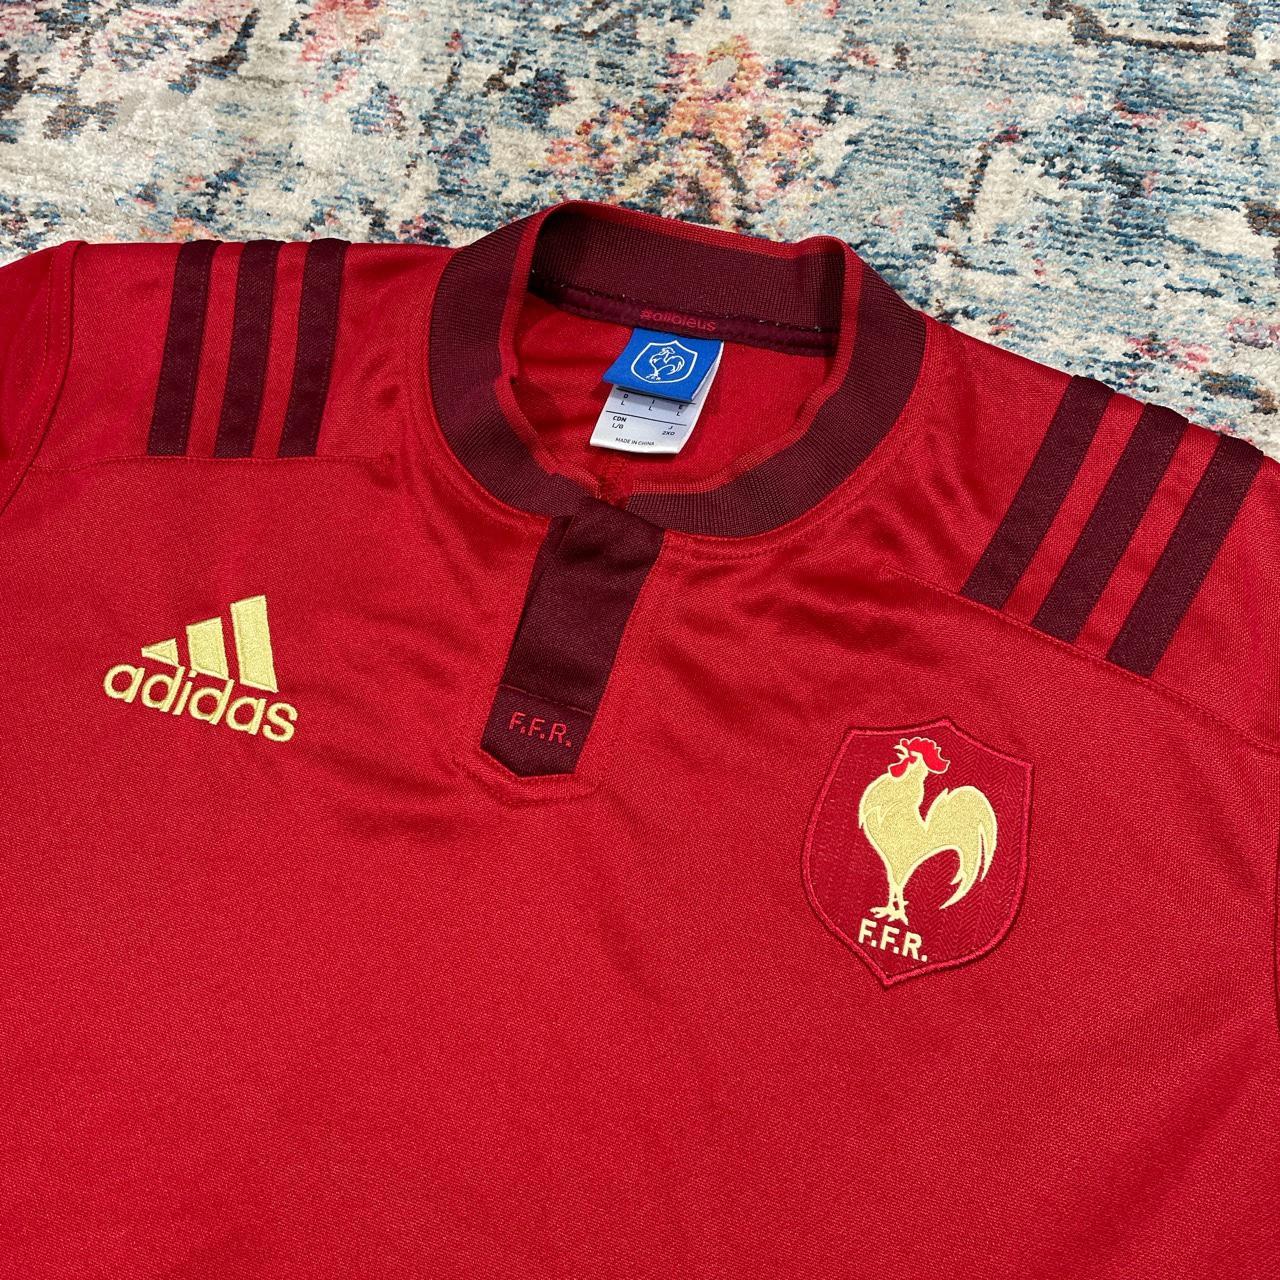 Retro Adidas France 2015 Alternate Rugby Shirt